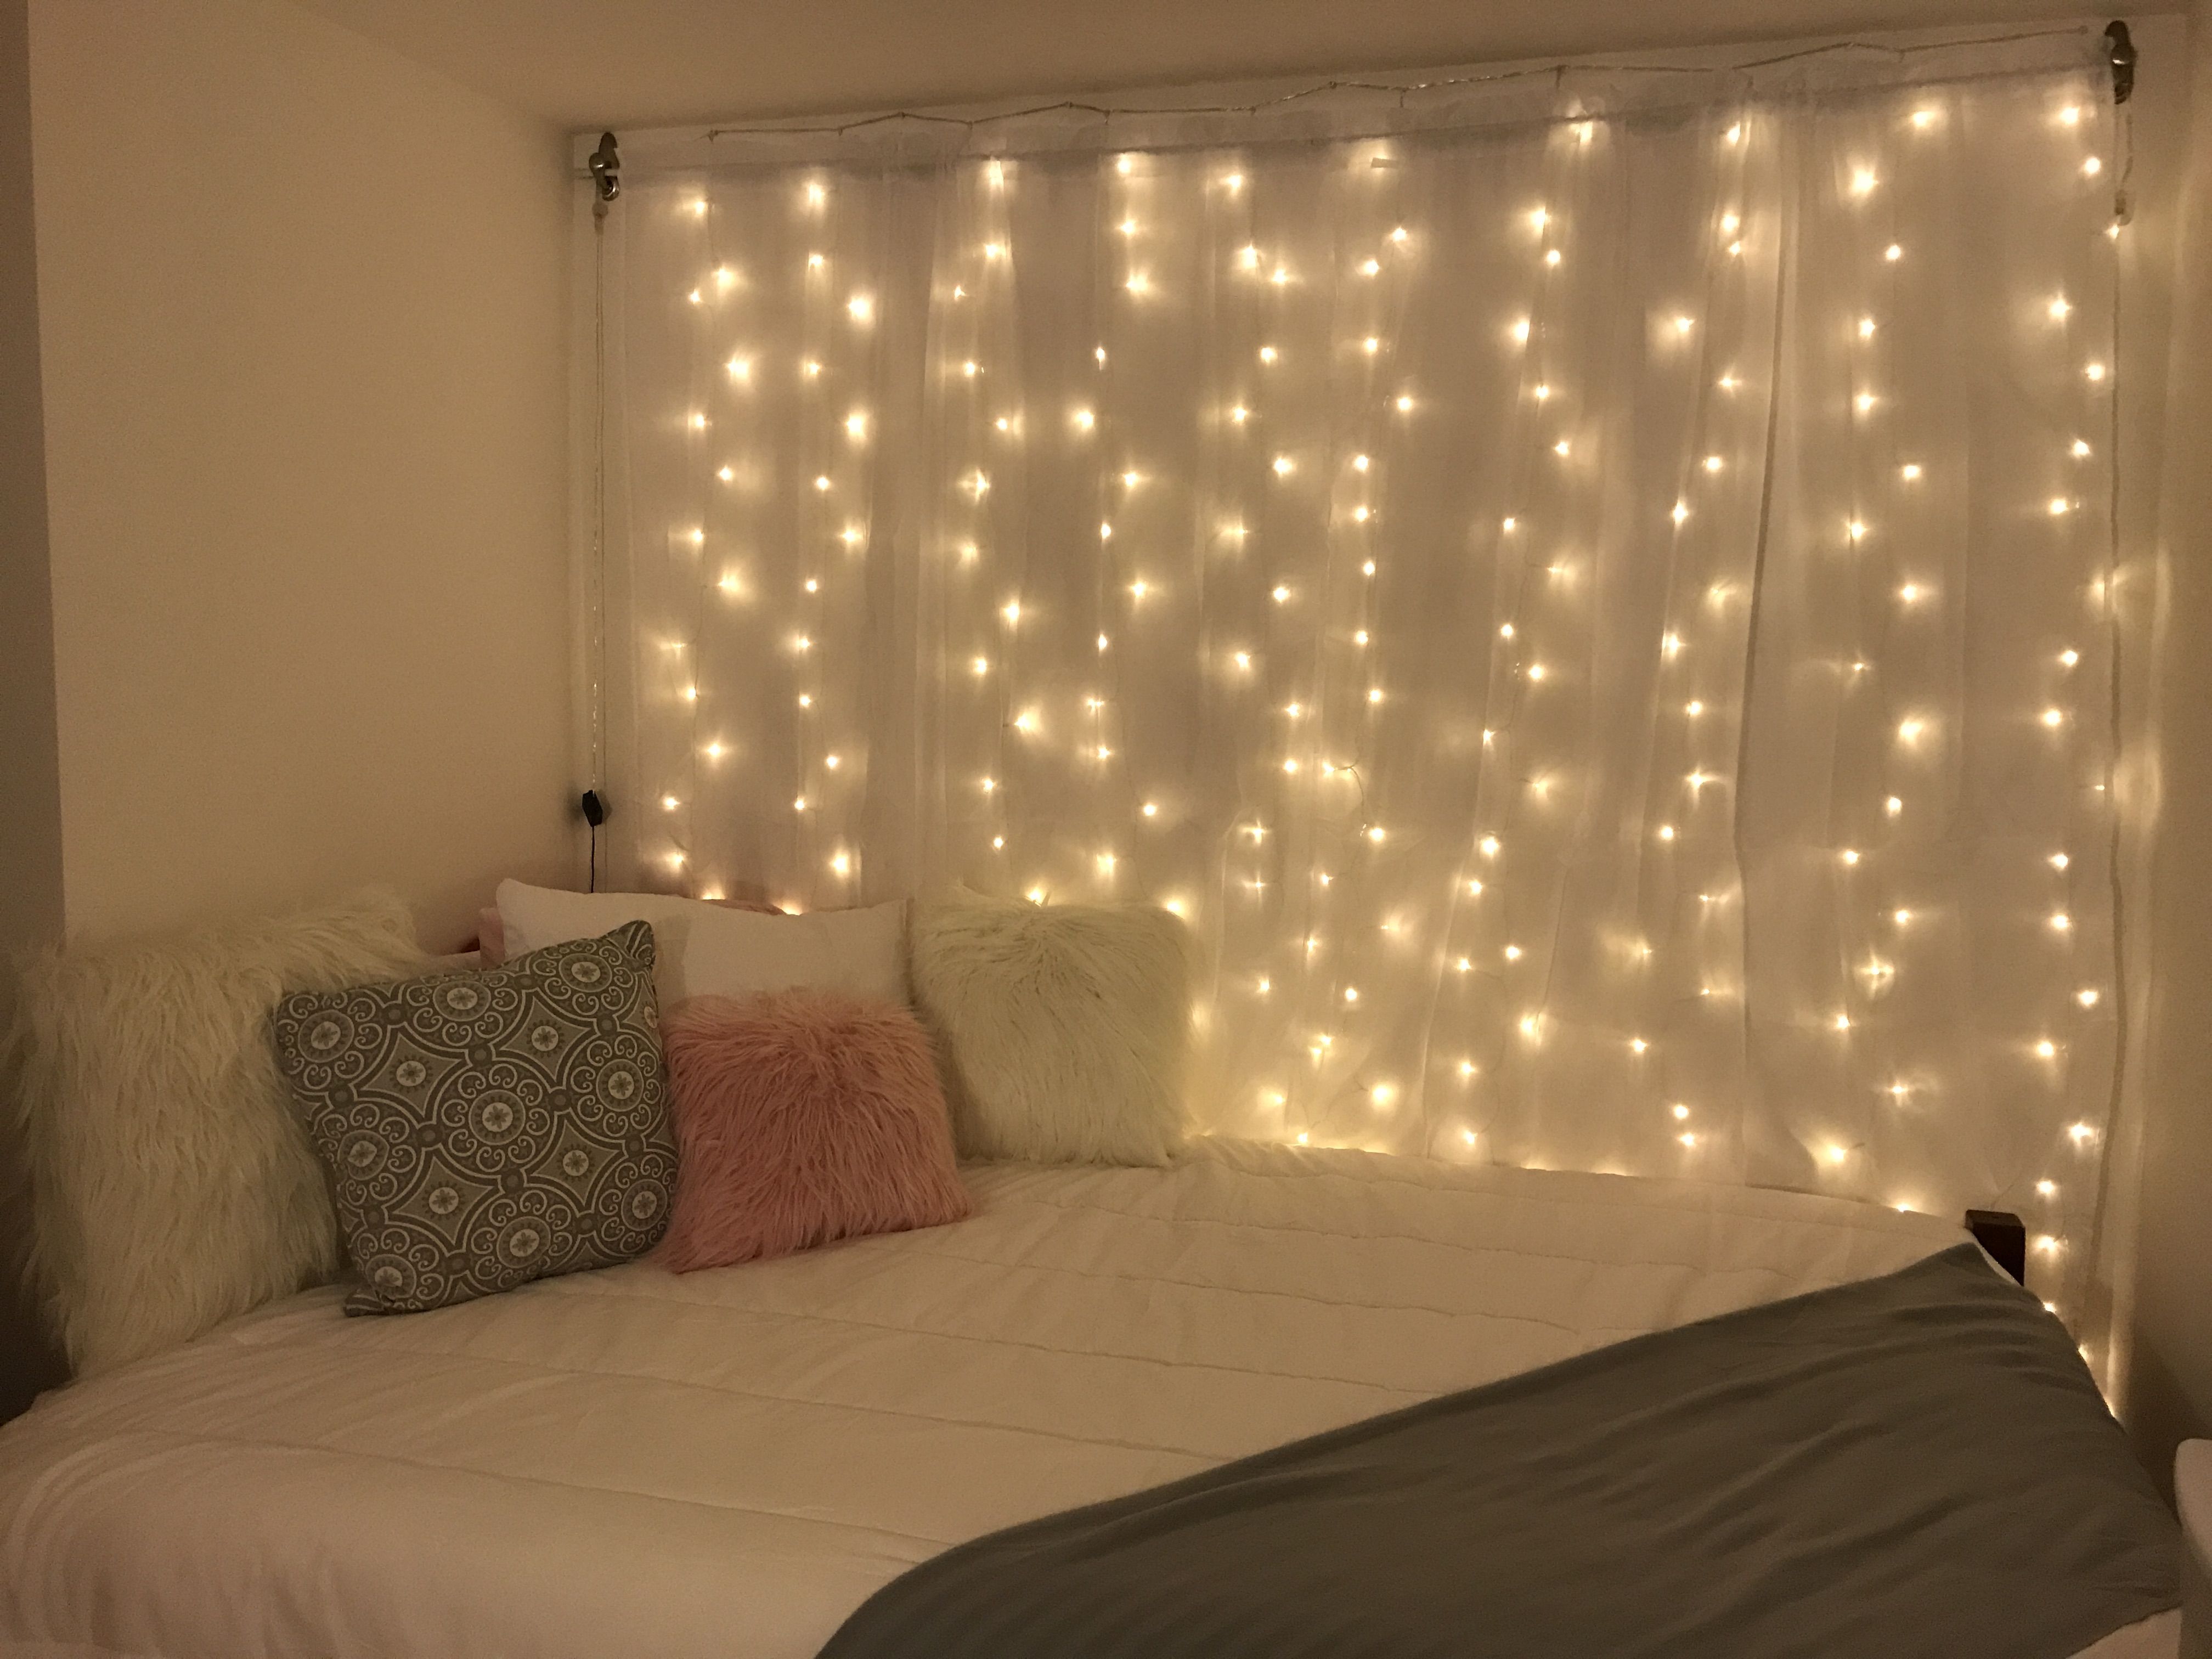 Dorm Decor with String Lights - Dorm Decor with String Lights -   16 diy Bedroom tumblr ideas